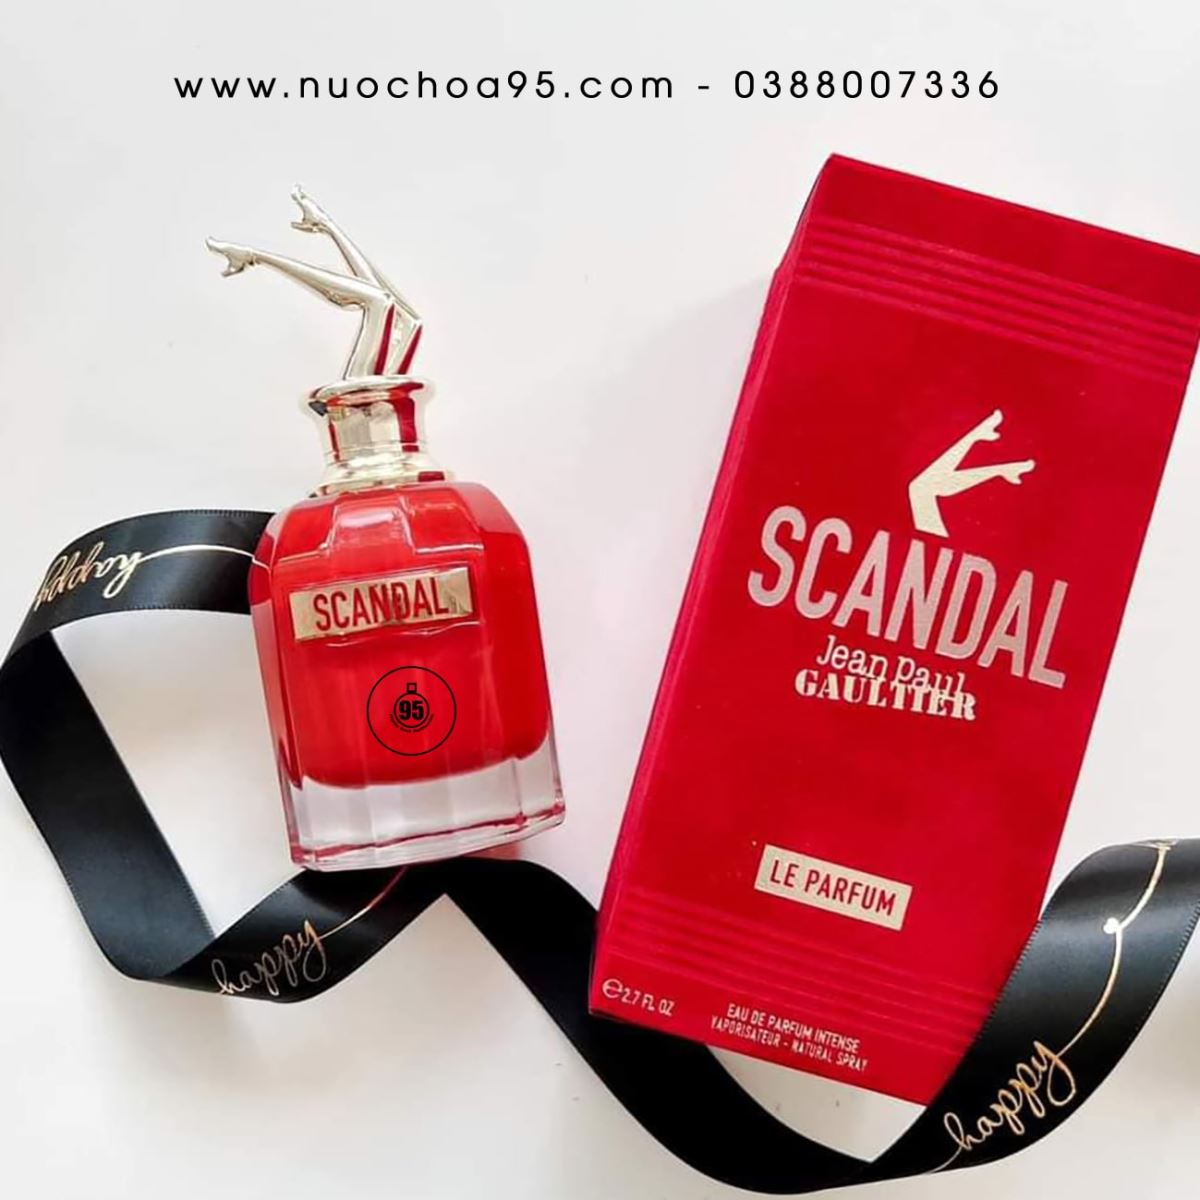 Nước hoa Jean Paul Gaultier Scandal Le Parfum - Ảnh 3